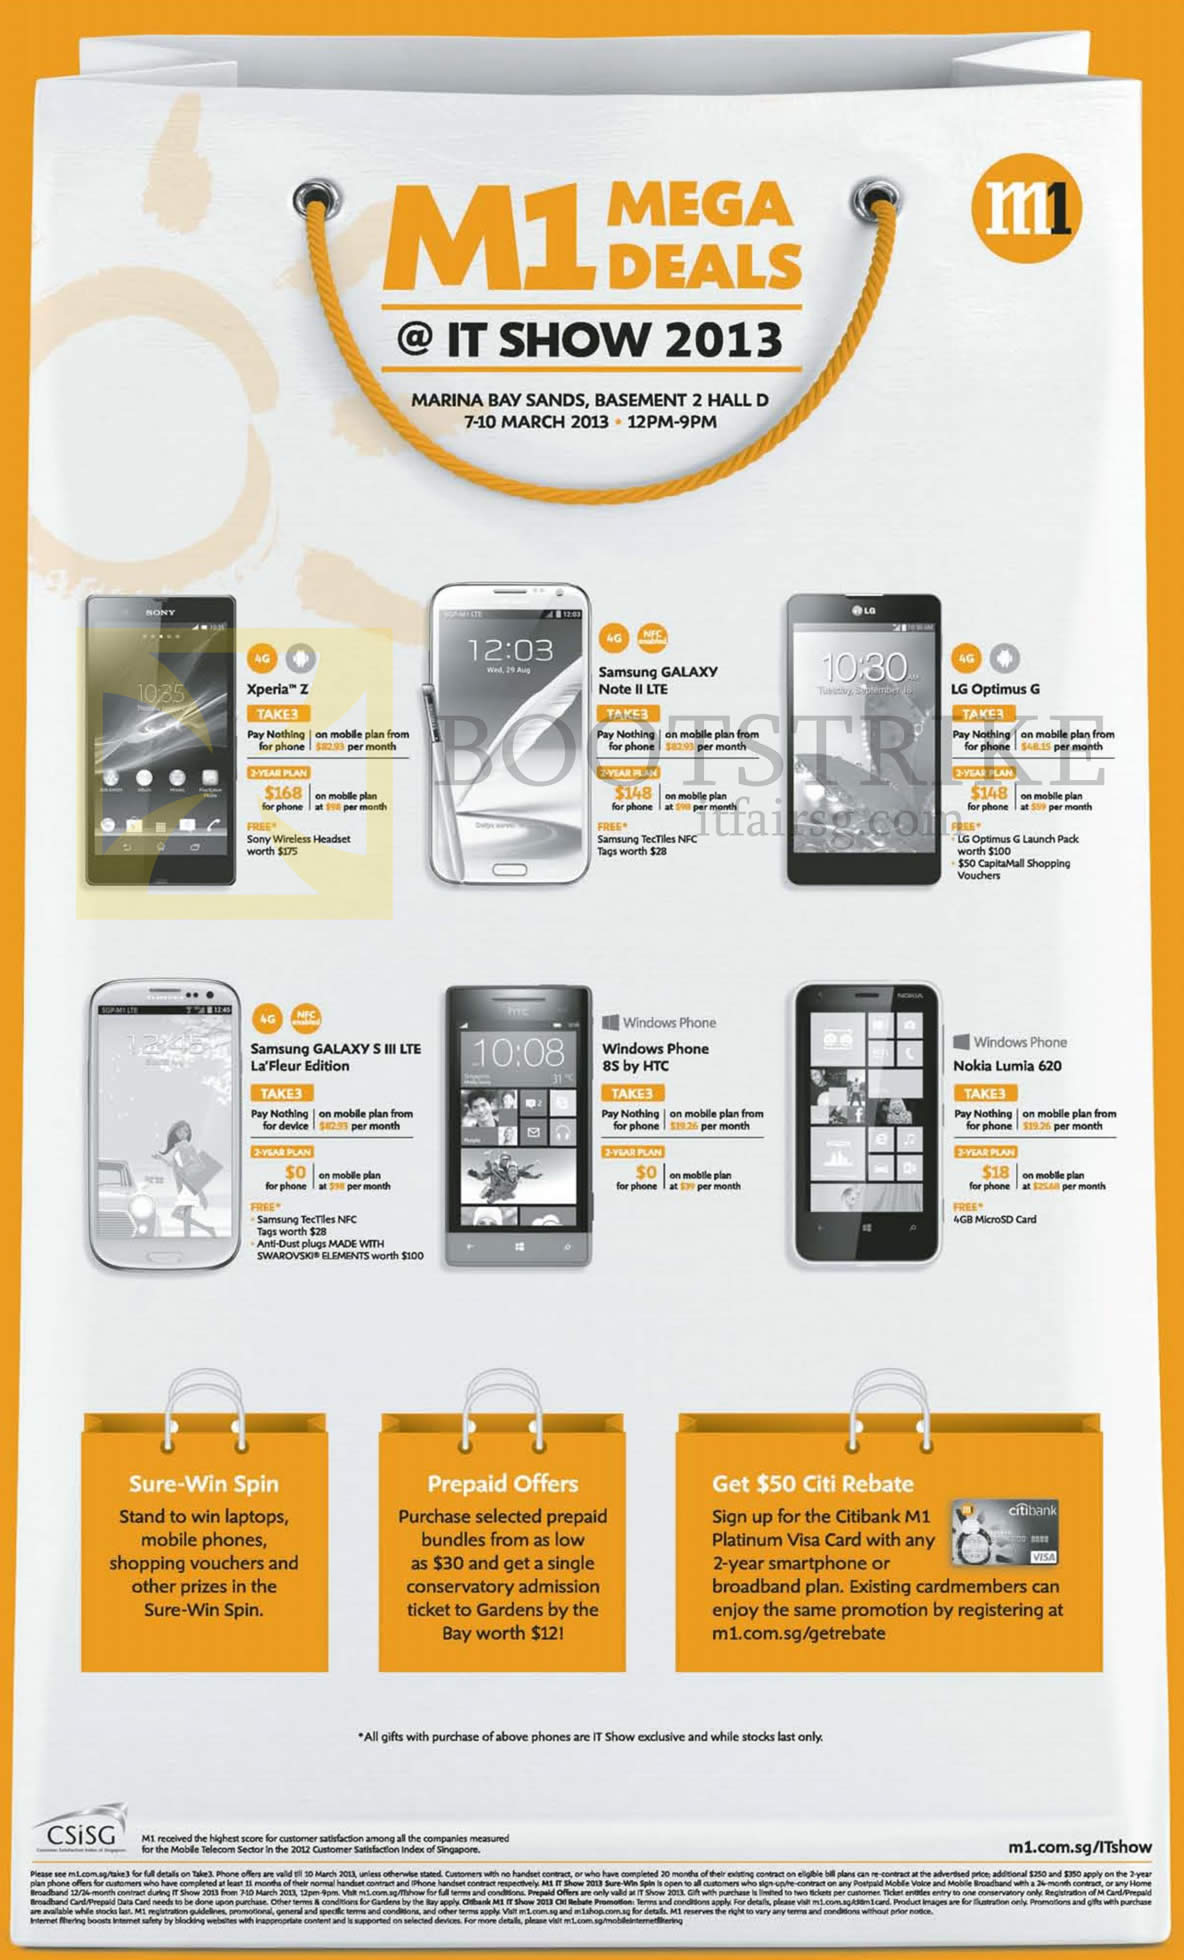 IT SHOW 2013 price list image brochure of M1 Sony Xperia Z, Samsung Galaxy Note II LTE, S III LTE, LG Optimus G, HTC Windows Phone 8S, Nokia Lumia 620